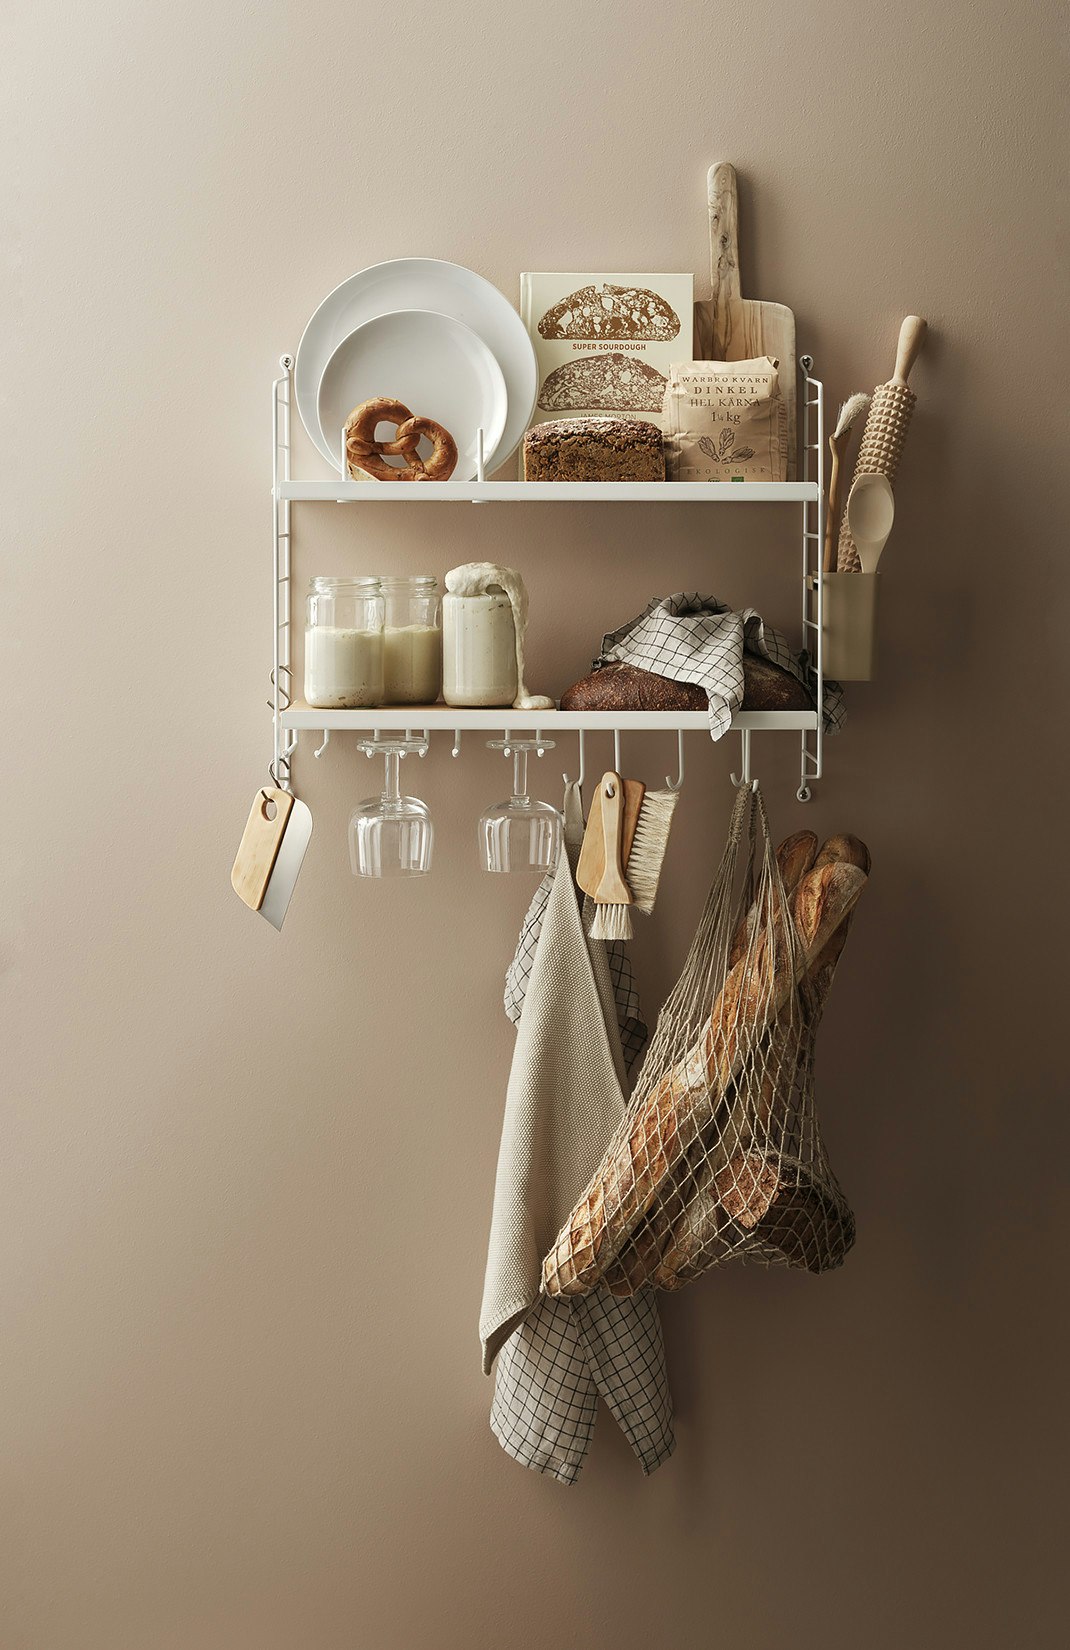 https://royaldesign.com/image/2/string-string-shelf-kitchen-complete-white-2?w=800&quality=80